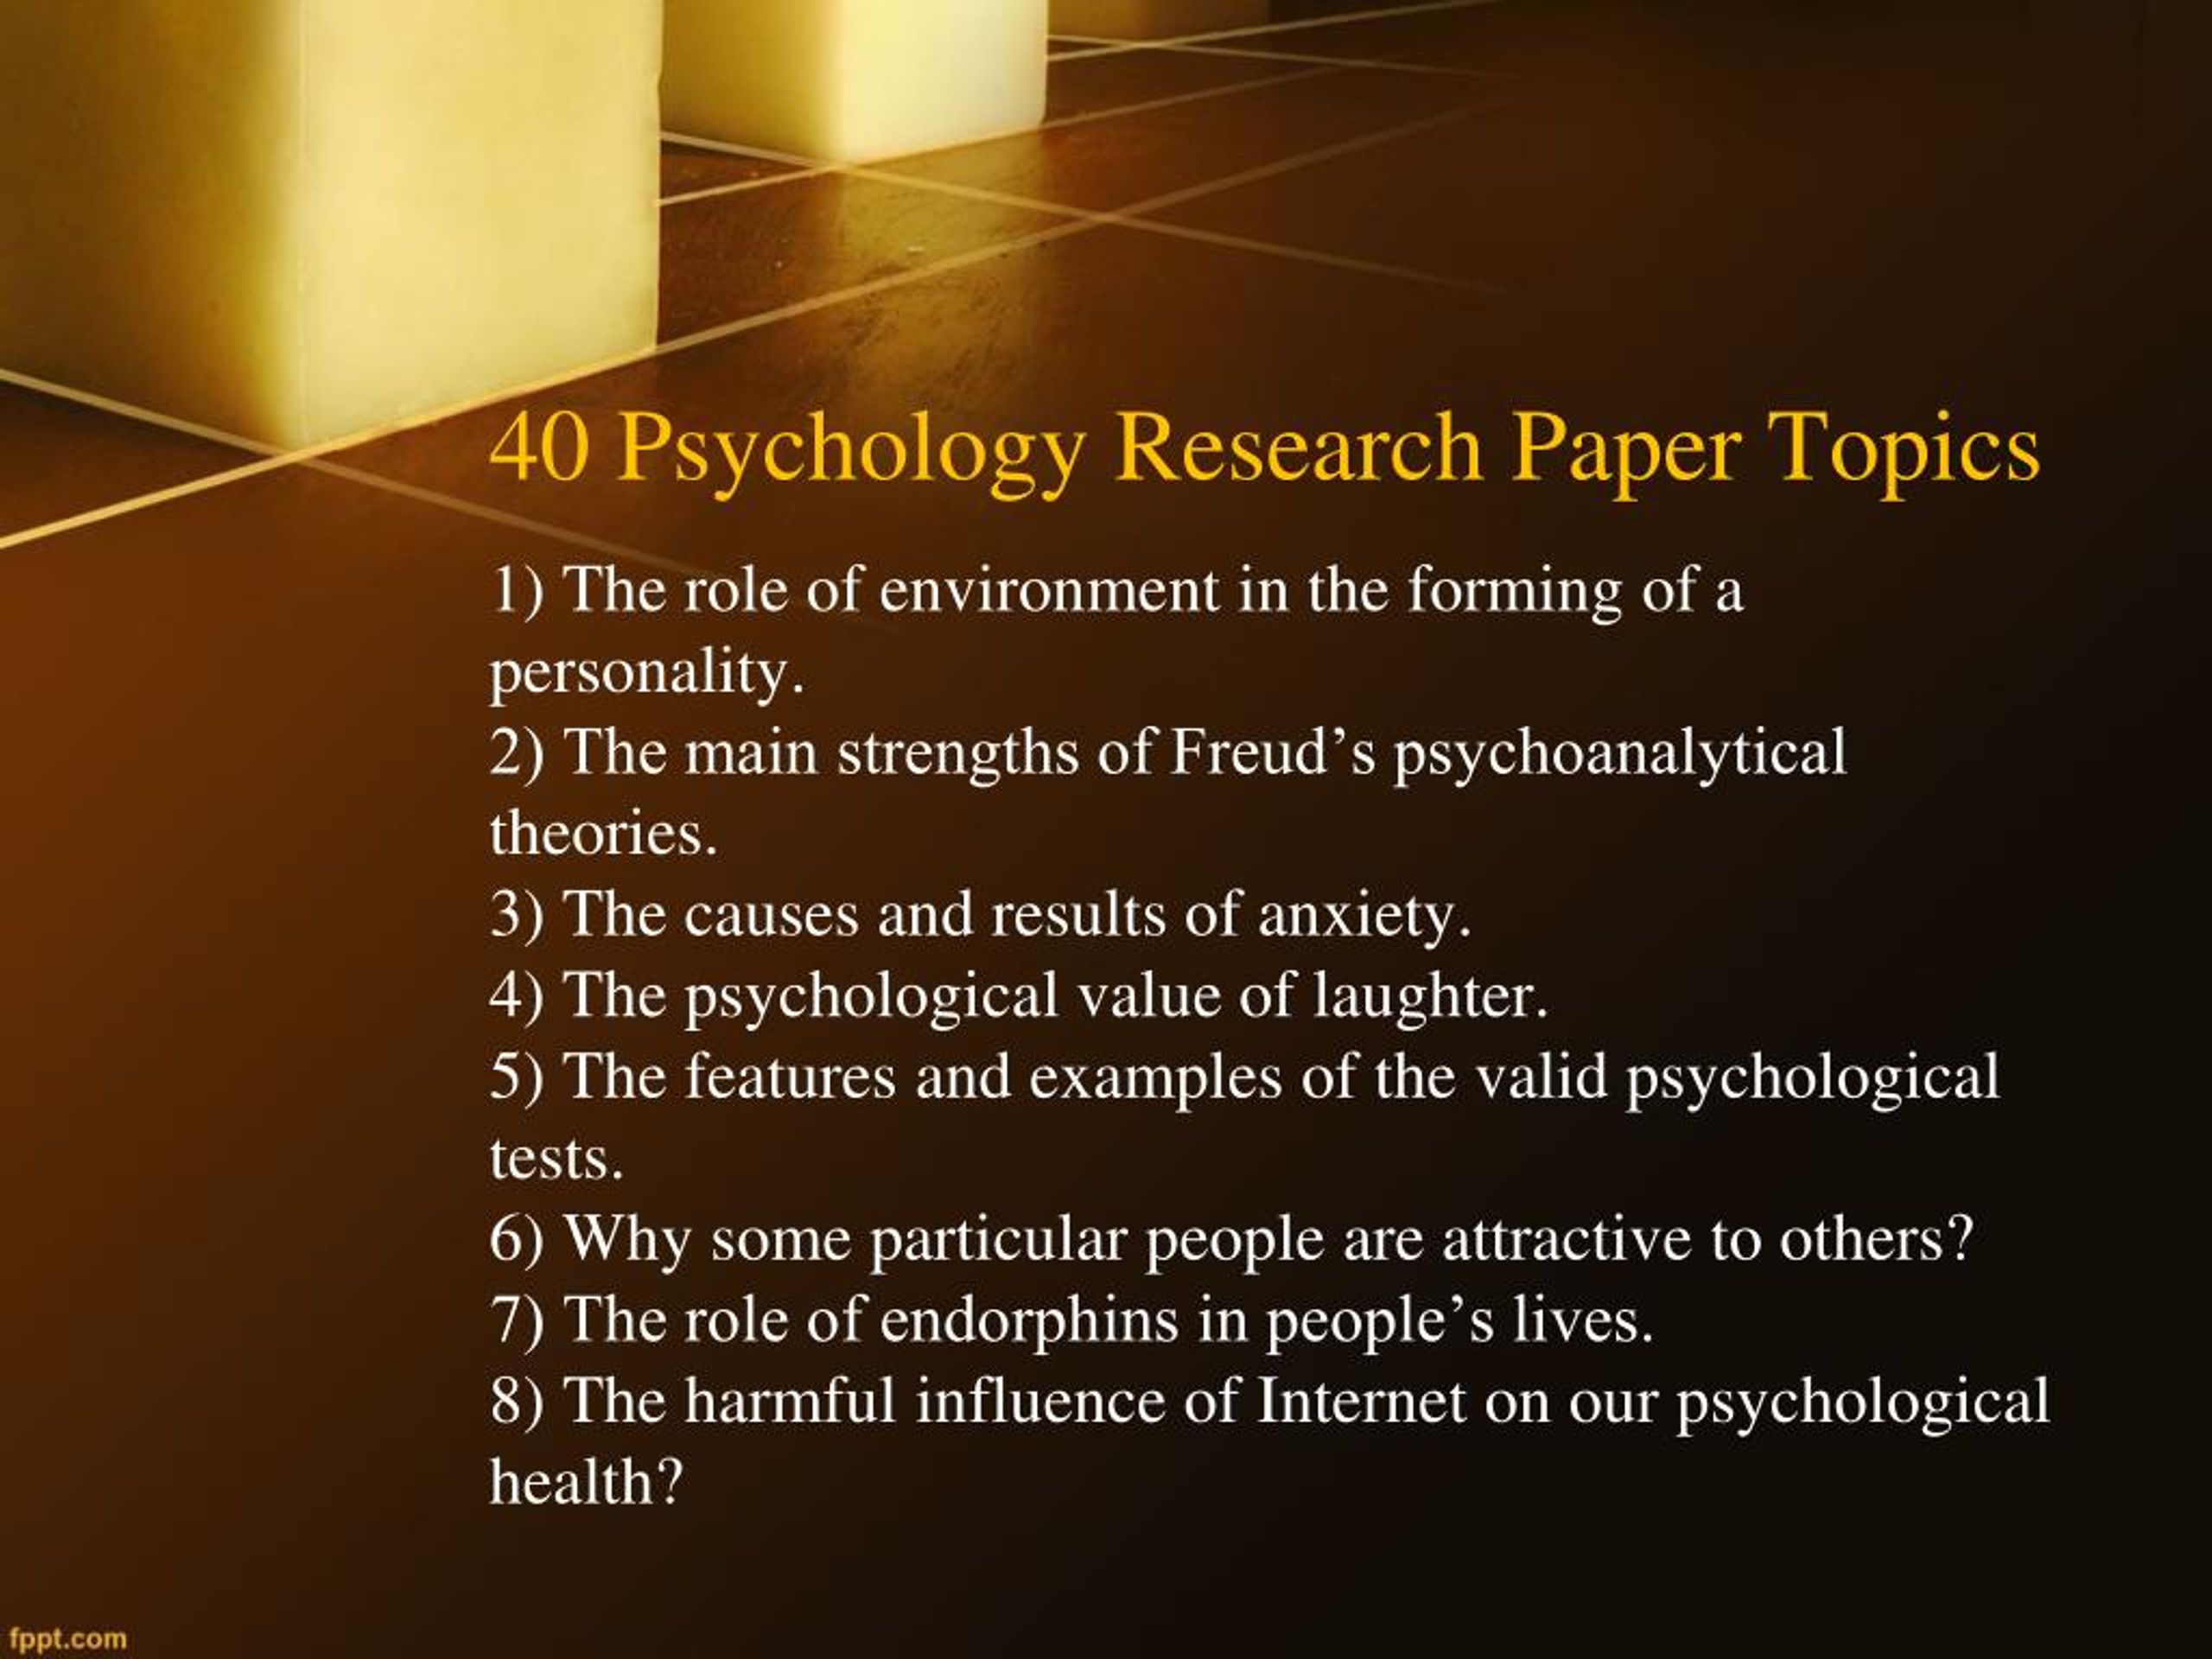 psychology essay topics